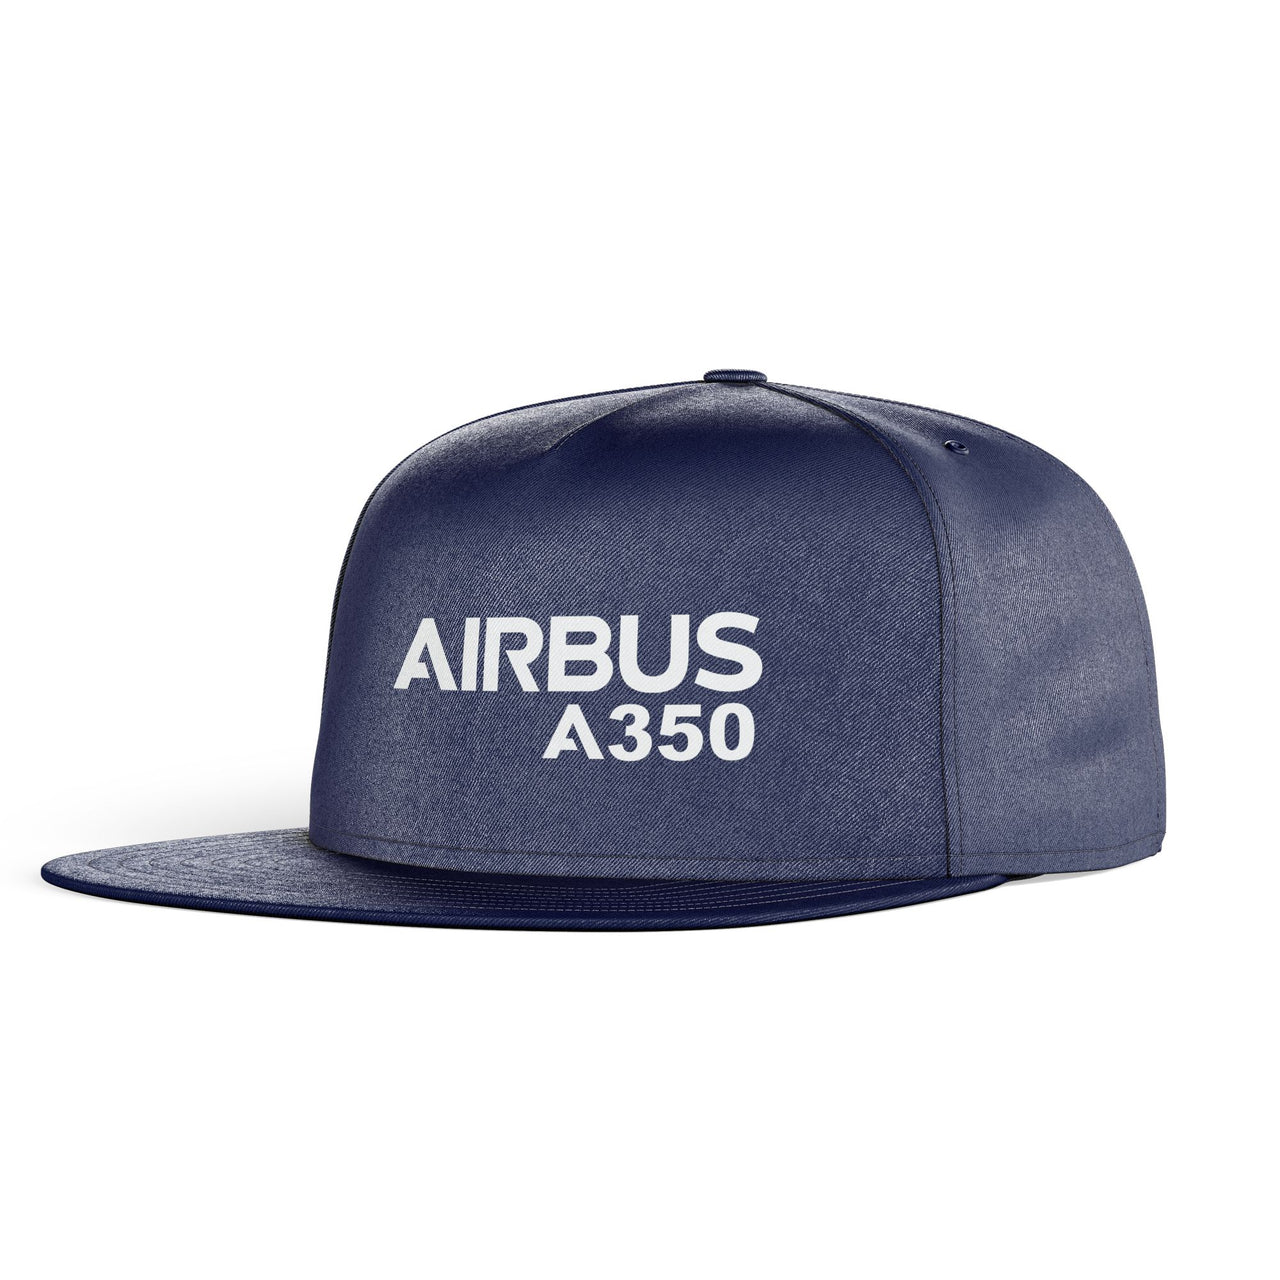 Airbus A350 & Text Designed Snapback Caps & Hats